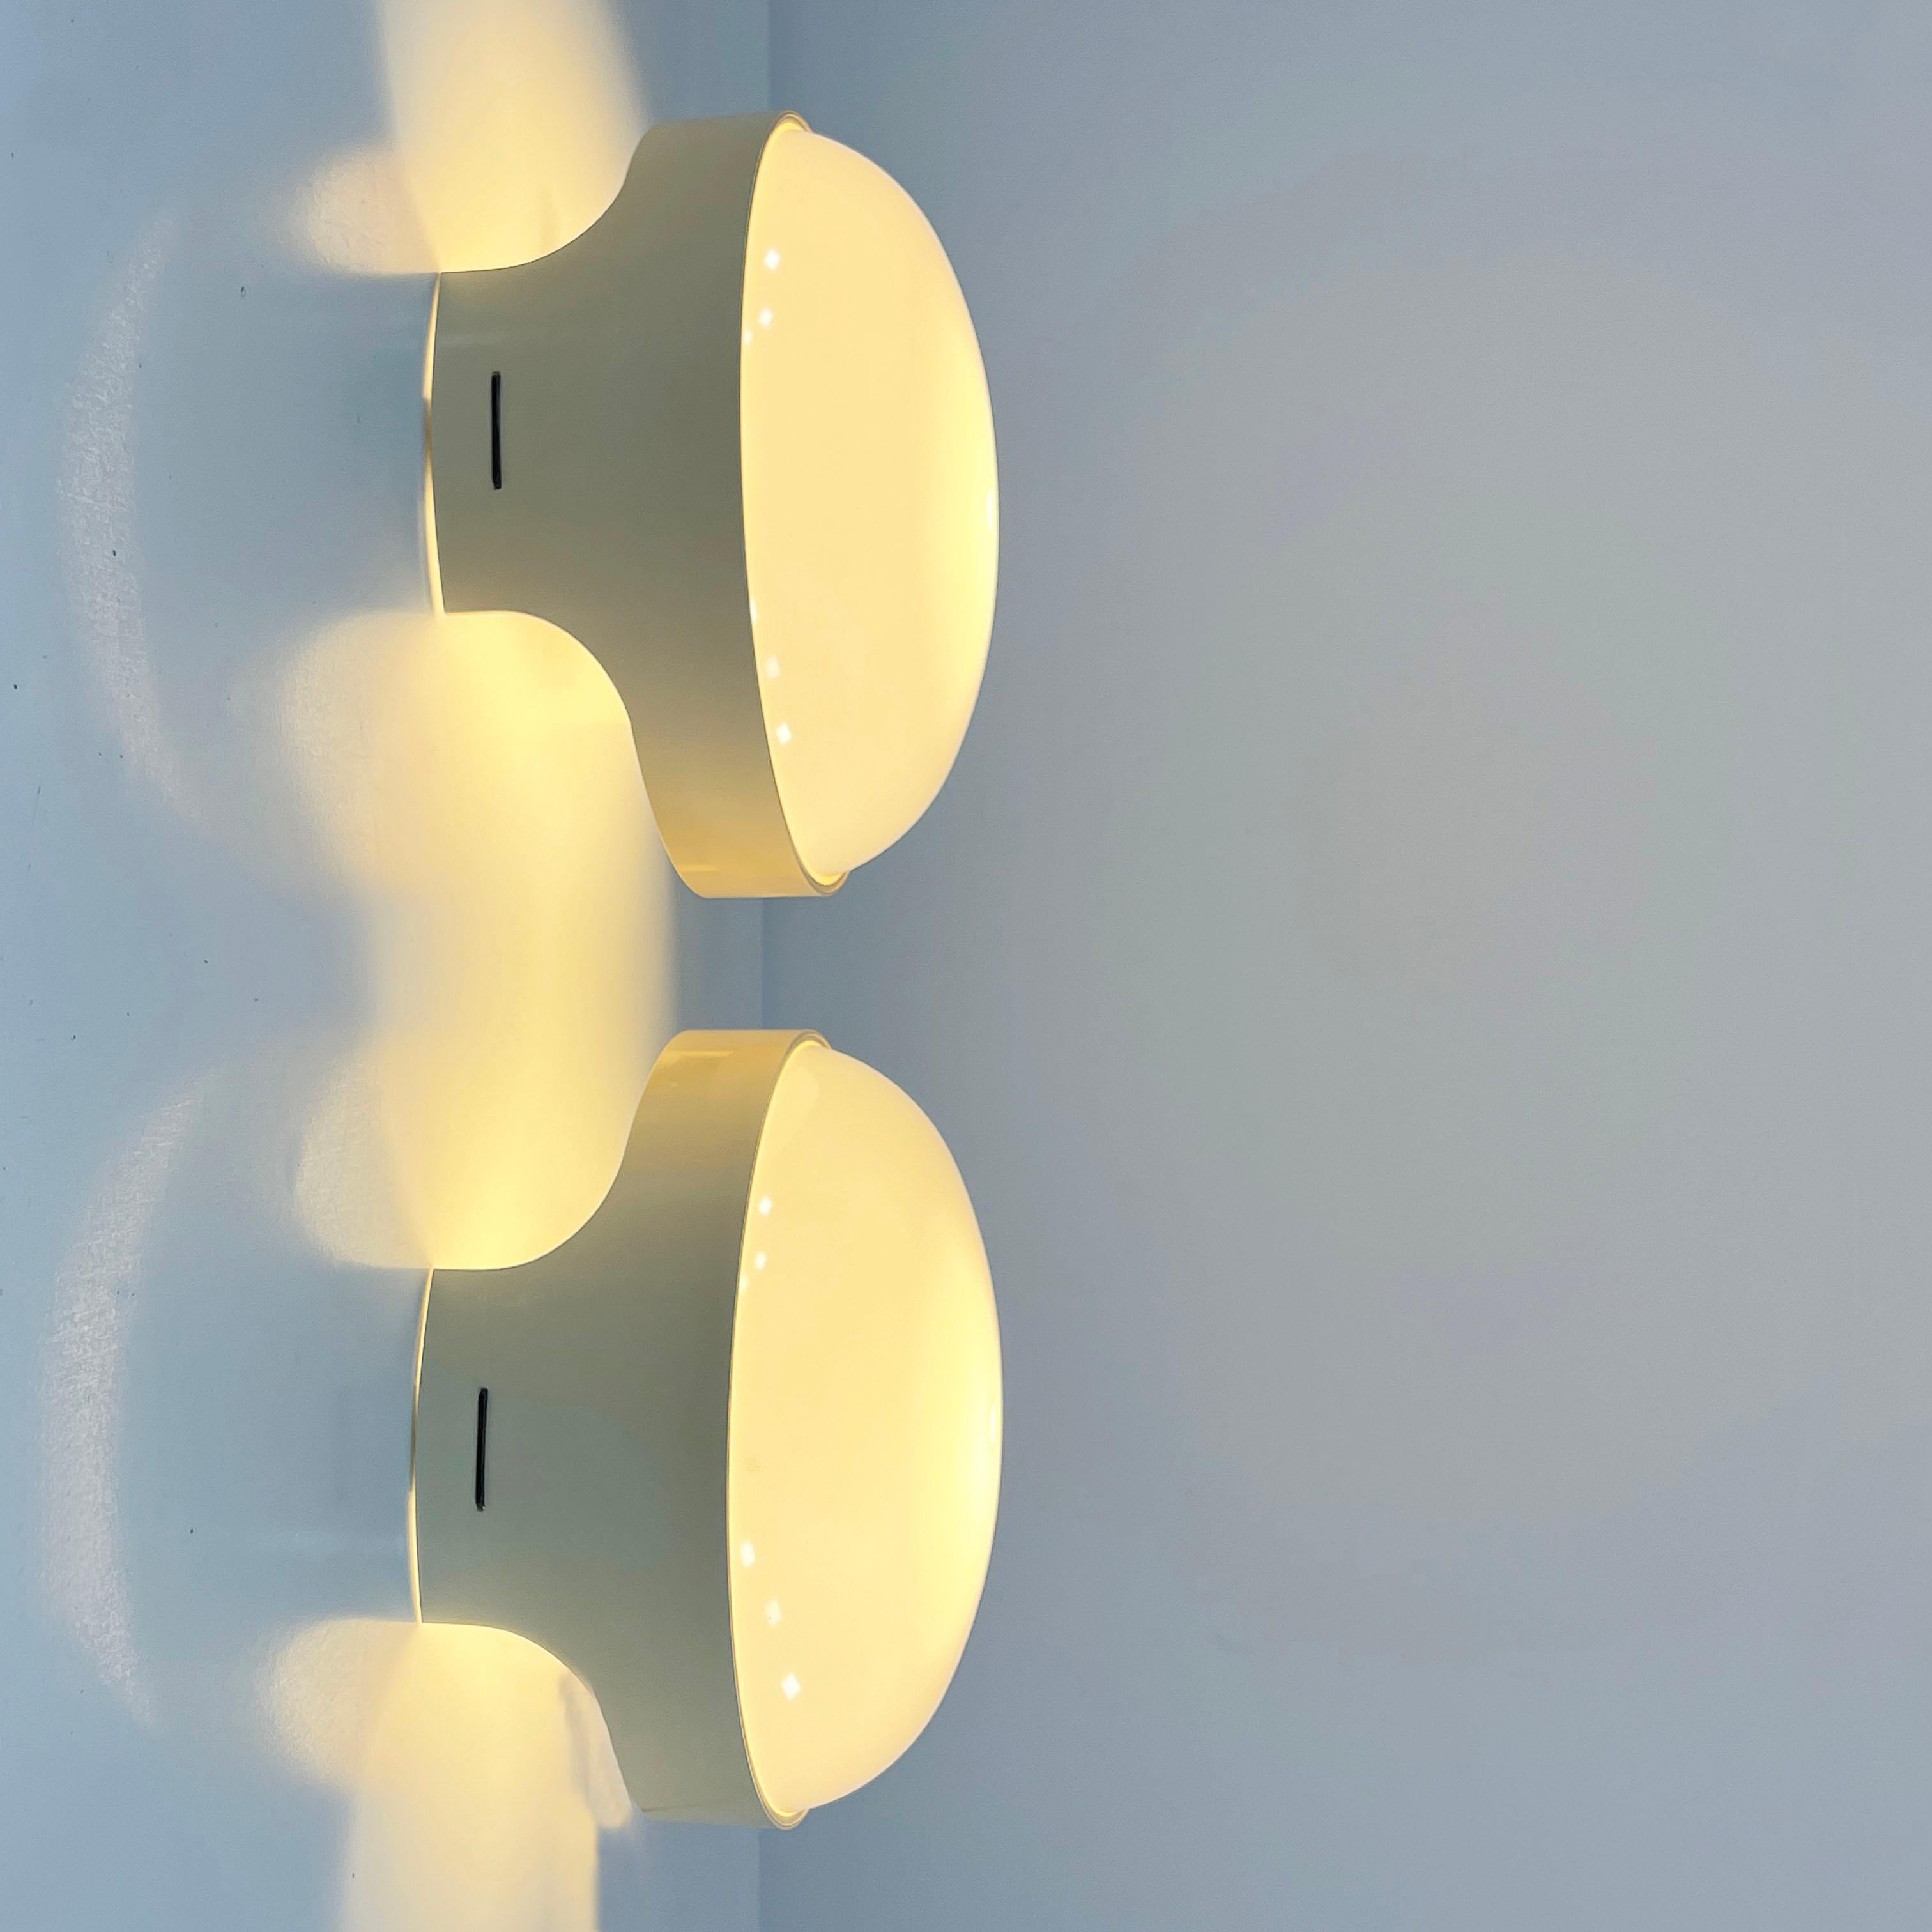 Designer - Joe Colombo
Producer - Kartell
Model - Quattro KD 4335 Wall Lamp 
Design Period - Sixties
Measurements - Width 25 cm x Depth 25 cm x Height 14 cm
Materials - Plastic
Color - White/Beige
Electrical Properties - Lightbulb E14
Comments -